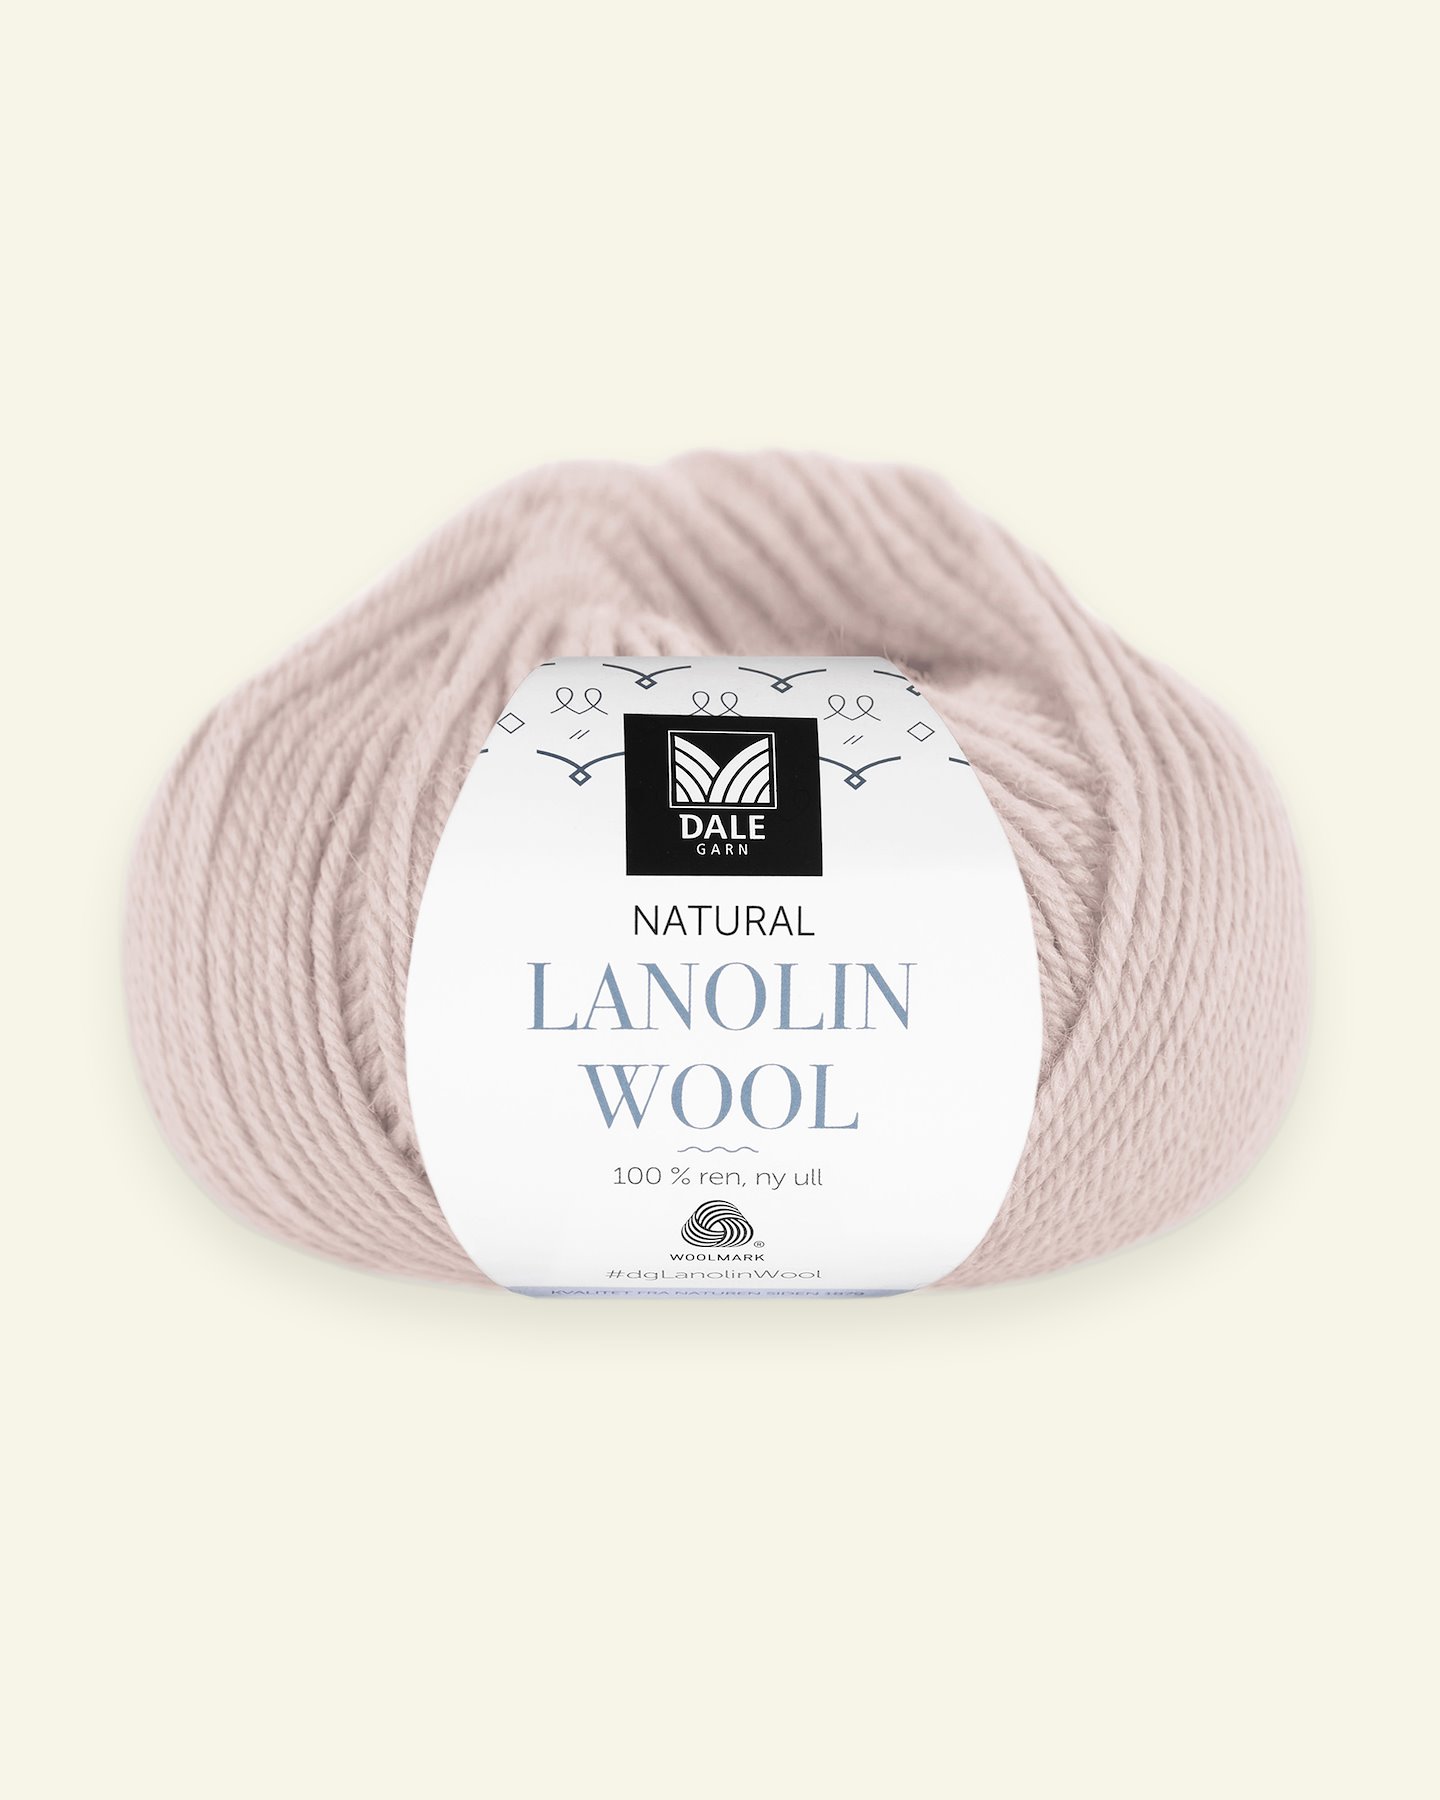 Dale Garn, 100% uldgarn "Lanolin Wool", pudder (1462) 90000300_pack